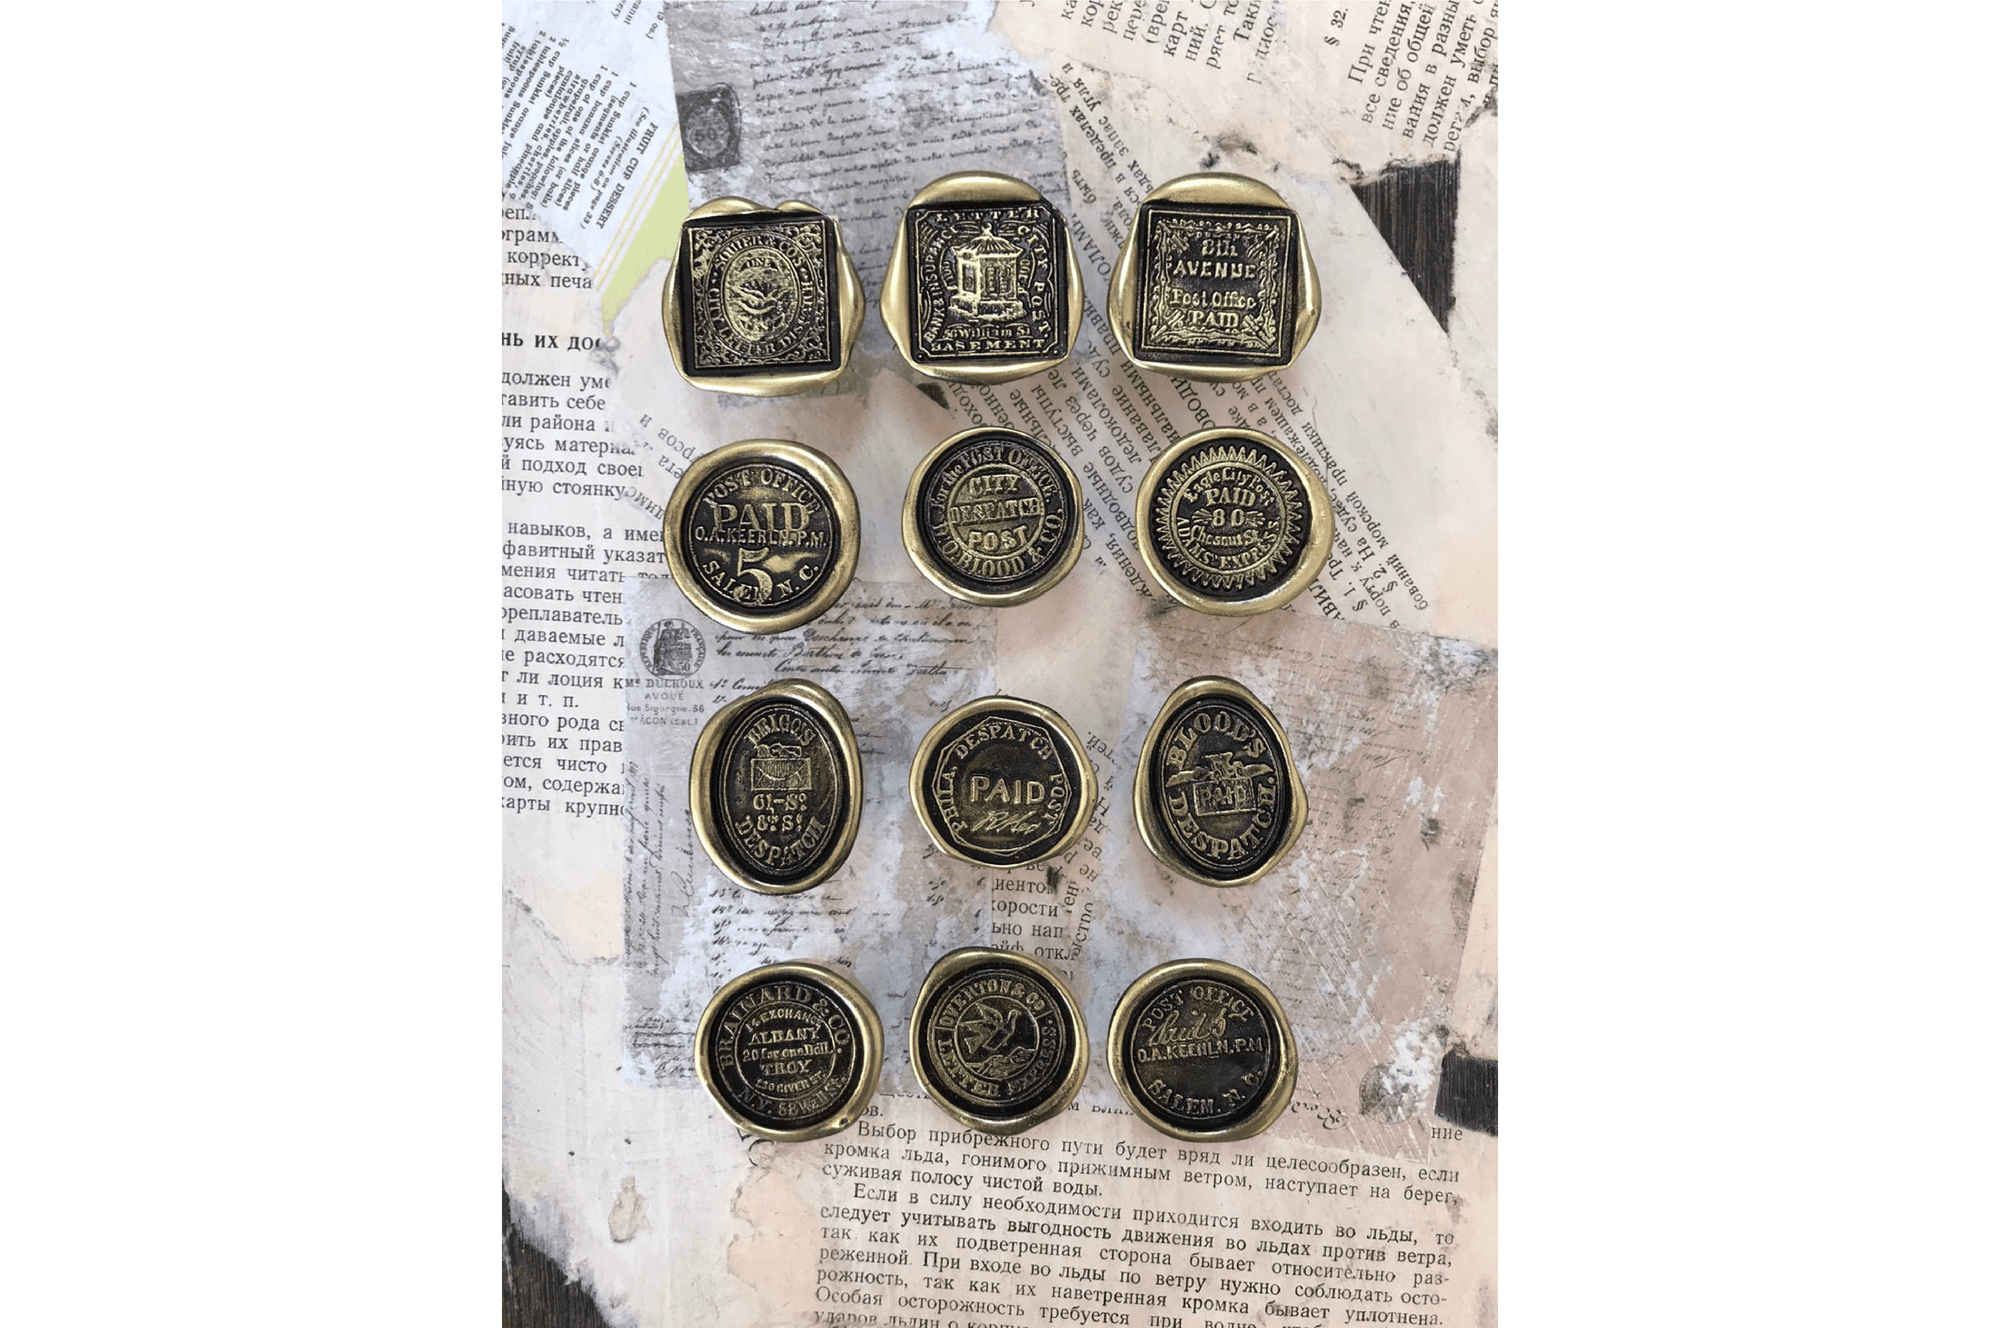 Postmark Wax Seal Stamp | City Letter Dispatch - Backtozero B20 - black, gold, gold dust, gold powder, mark, post, postal, postal stamp, postmark, Signature, signaturehandle, square